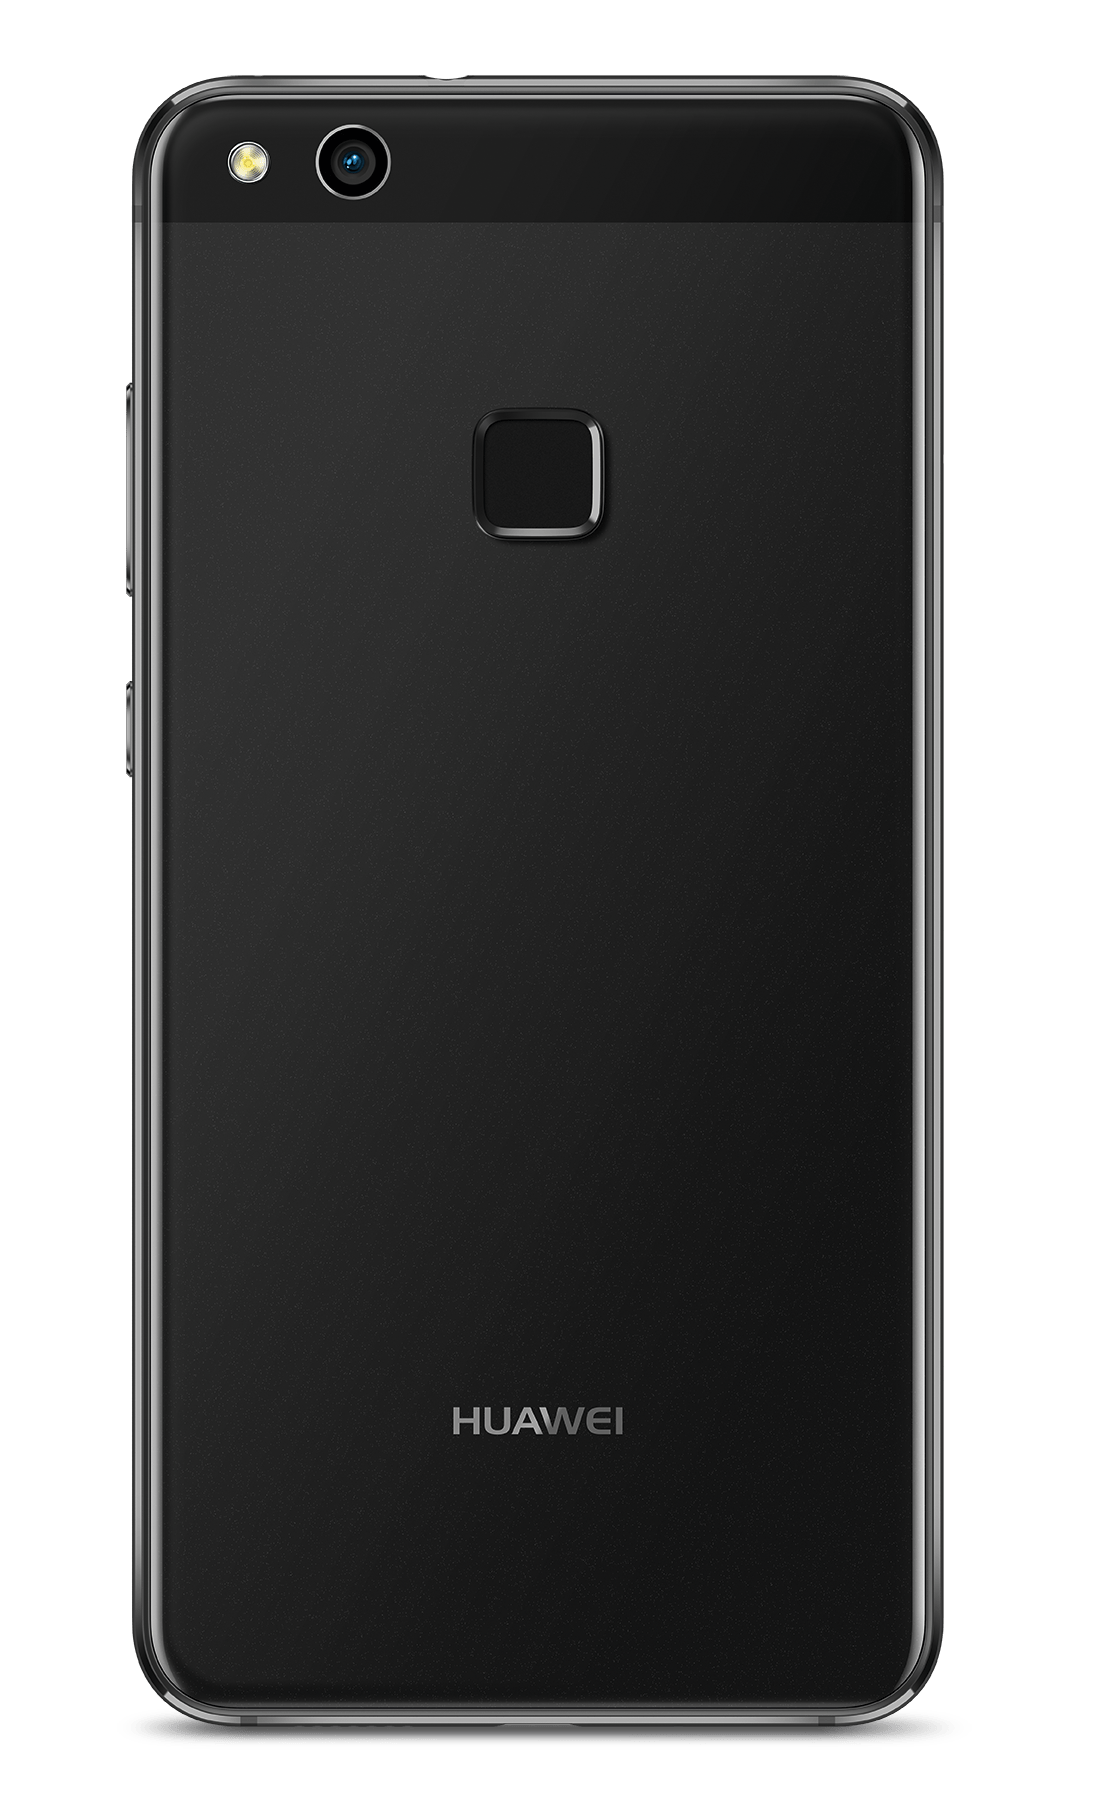 Huawei P10 Lite Mobile Phone Deals Huawei Best Mobile Phone